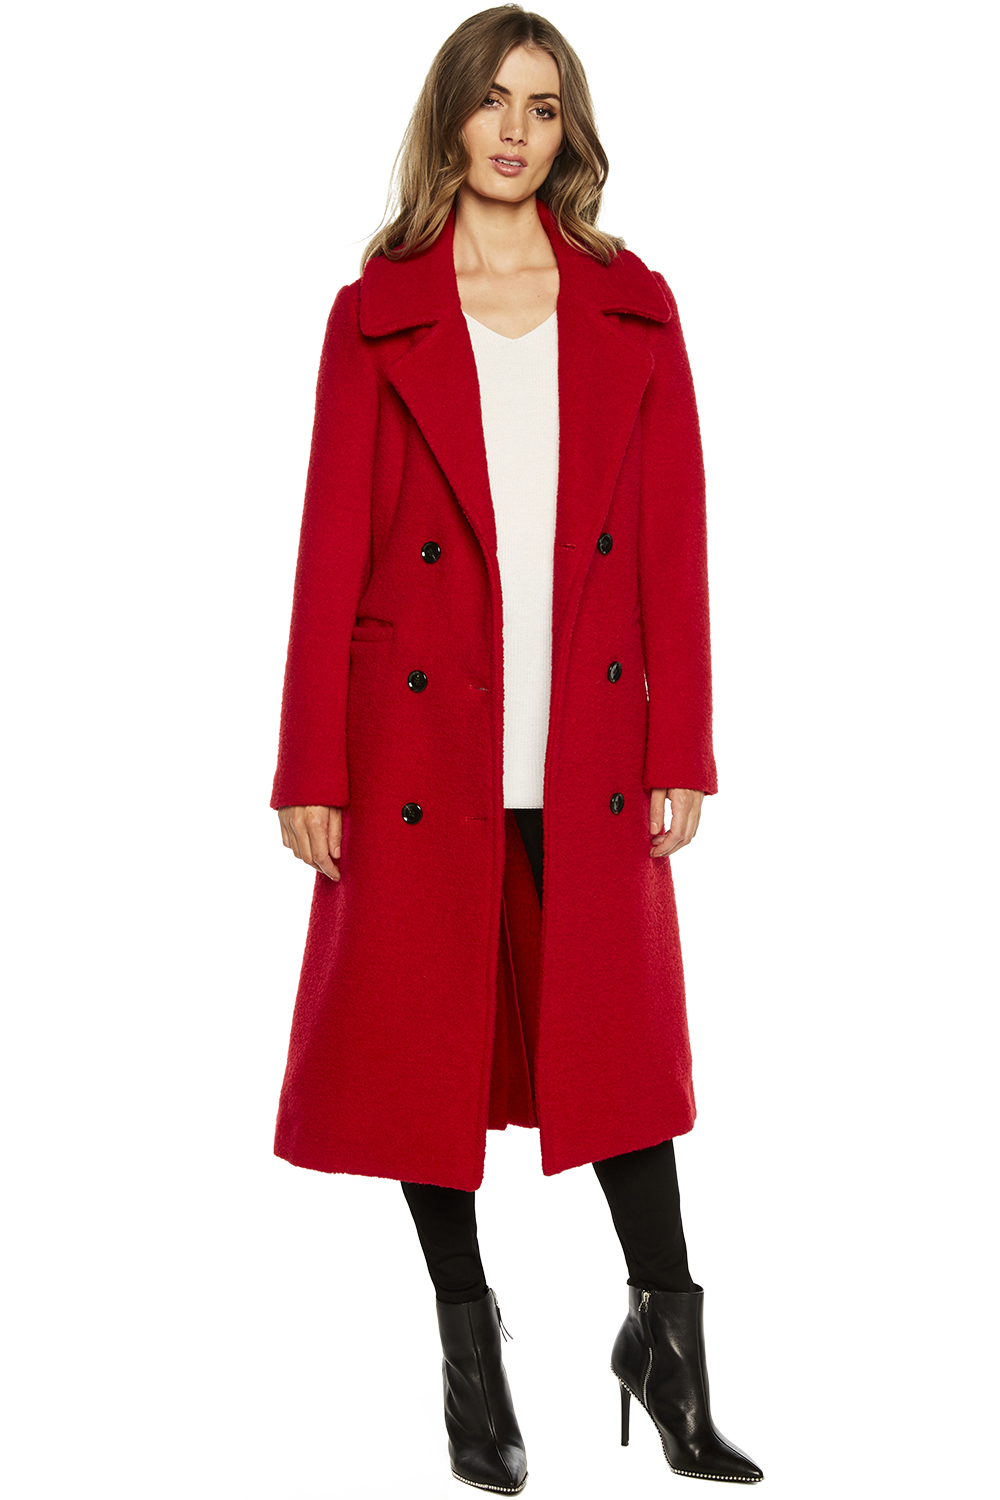 Accor Horn apologi Oversized Coat in Winter Red | Bardot